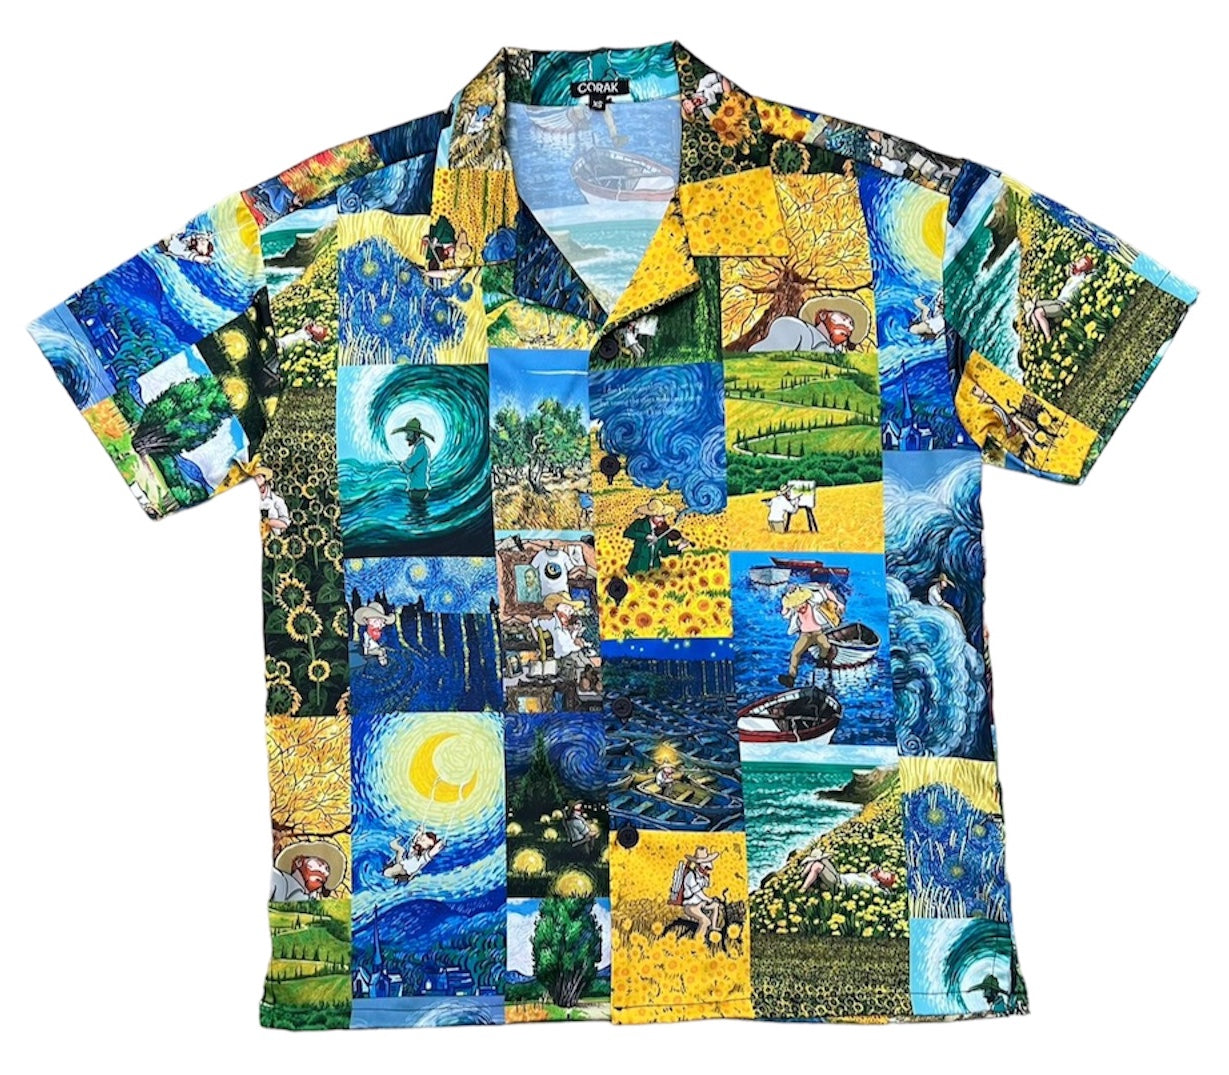 Van Gogh Shirt